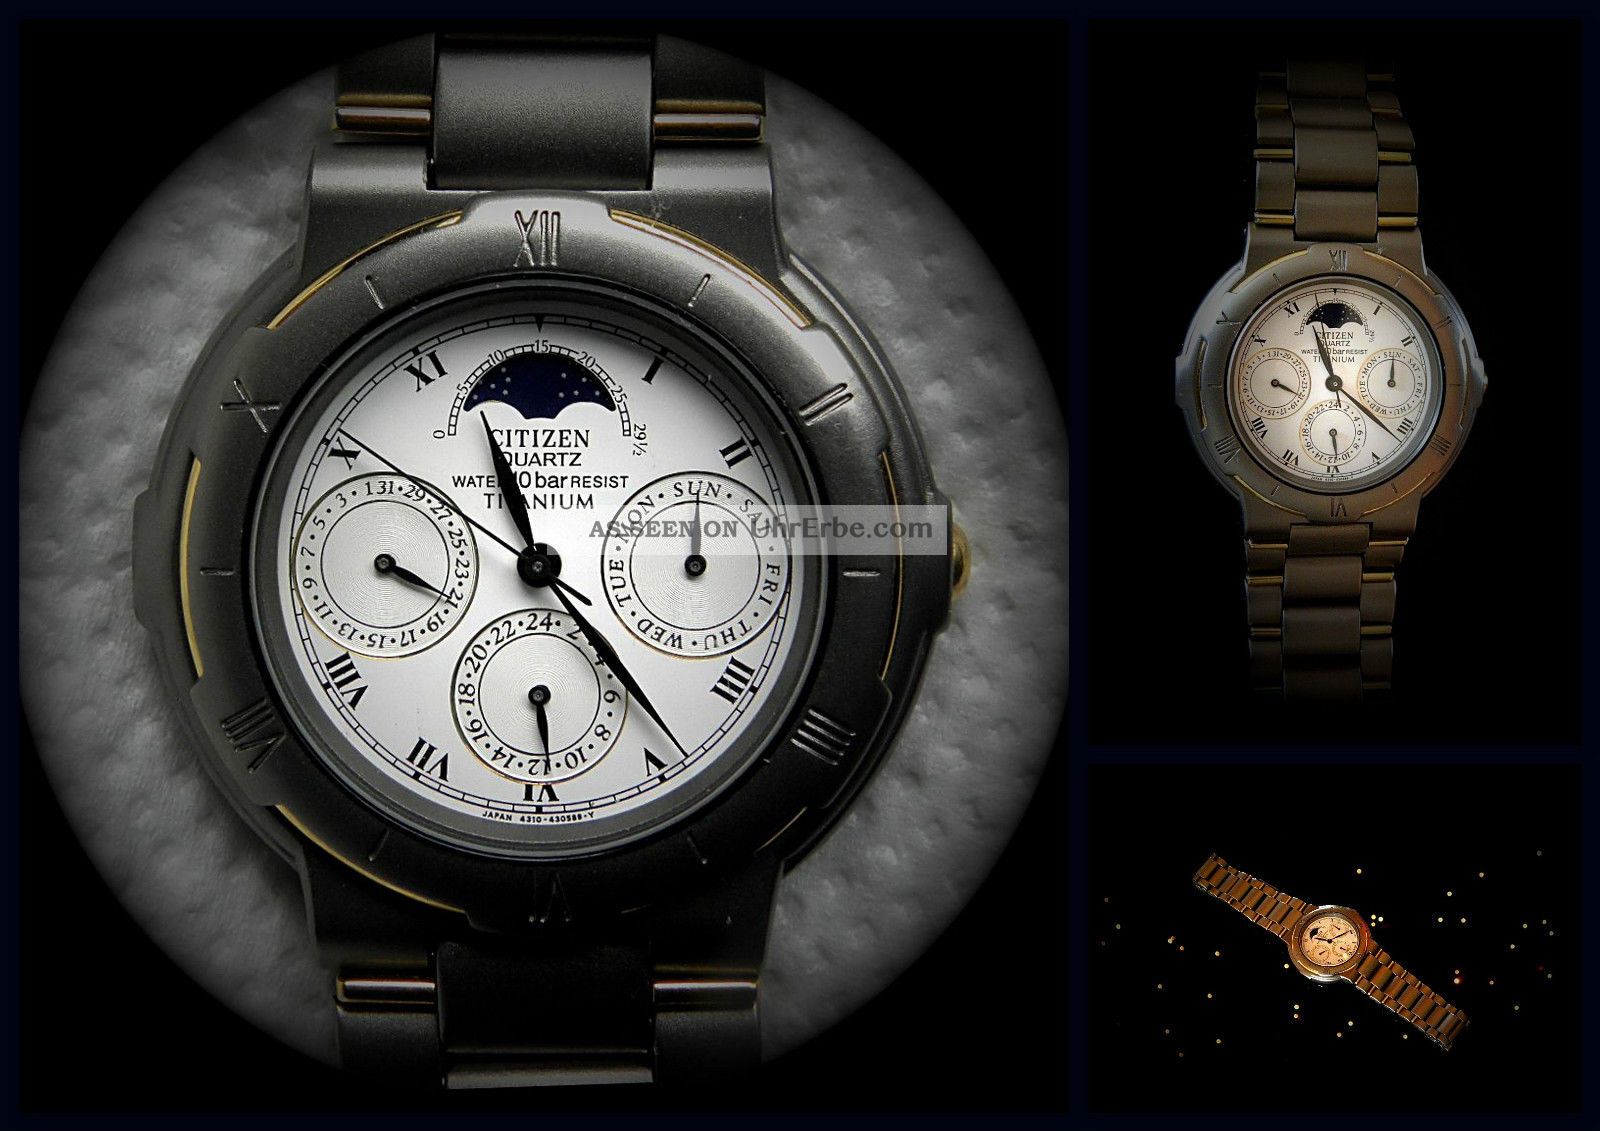 Citizen Titanium Bicolor Mondphasen Uhr Kaliber 4310 Day Date 24 - Std Armbanduhren Bild